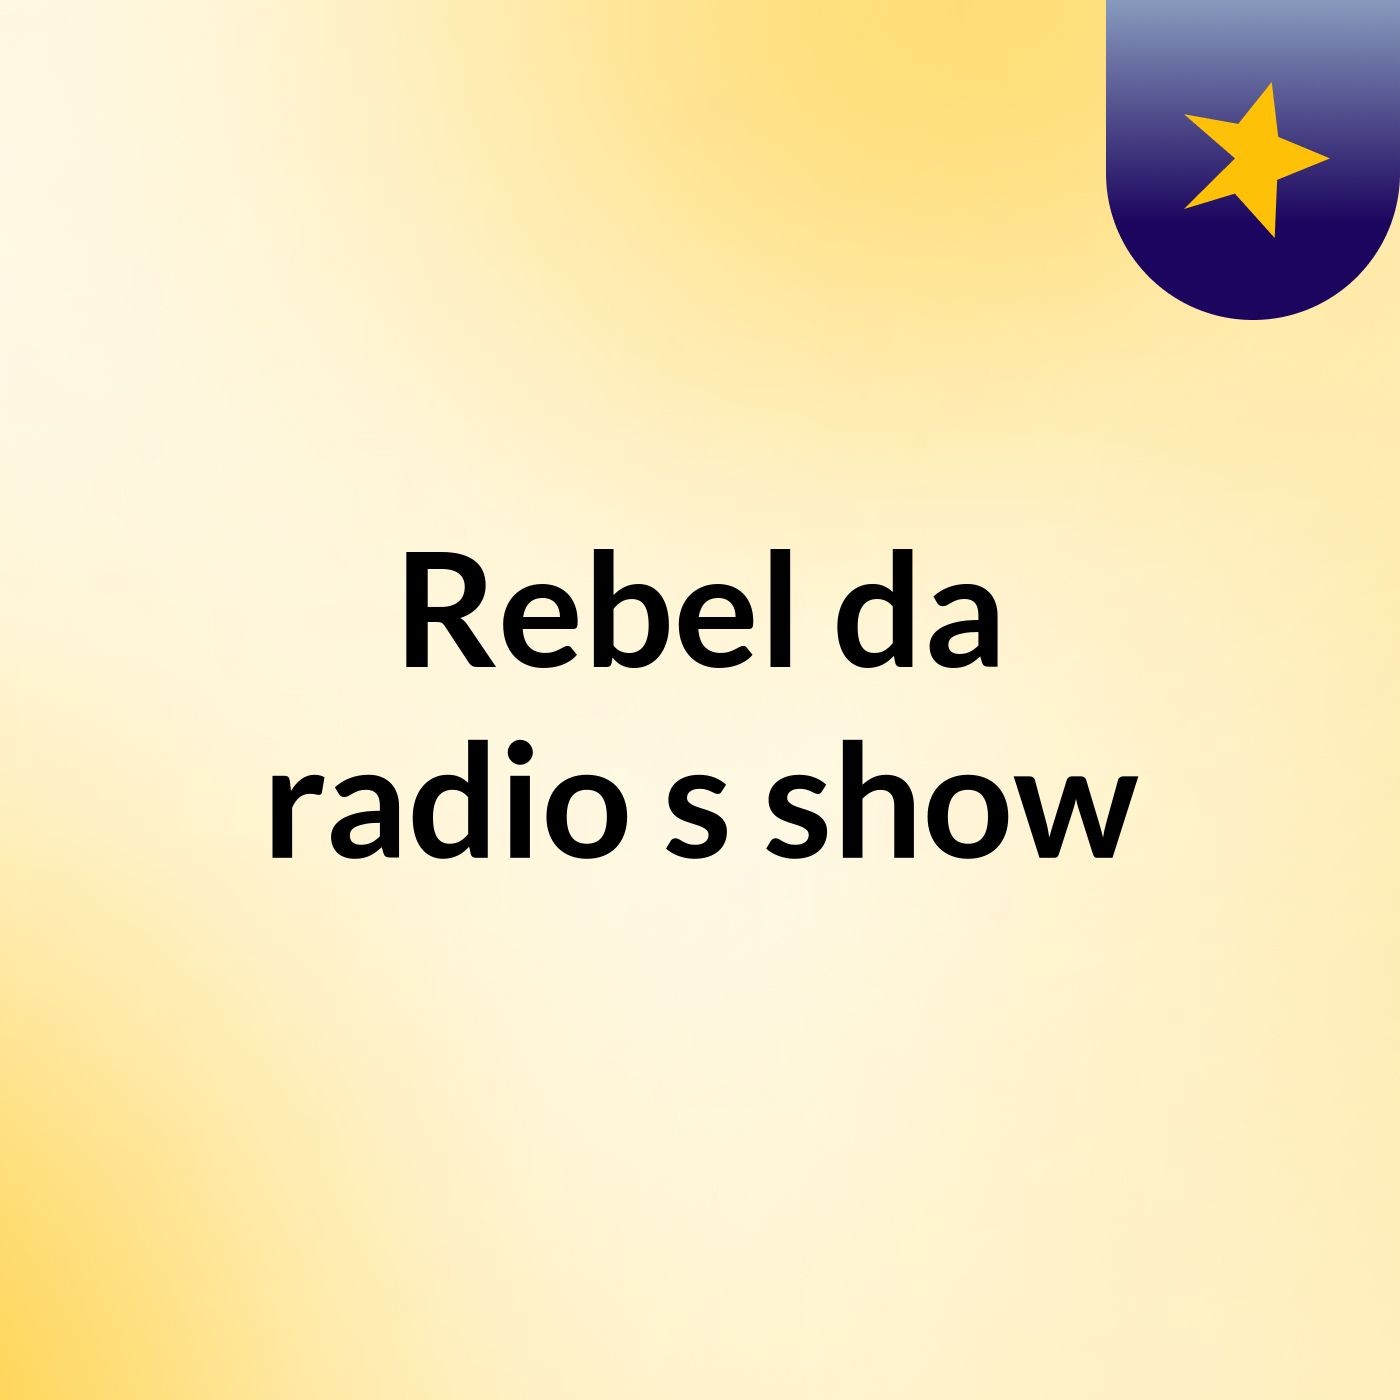 Rebel da radio's show